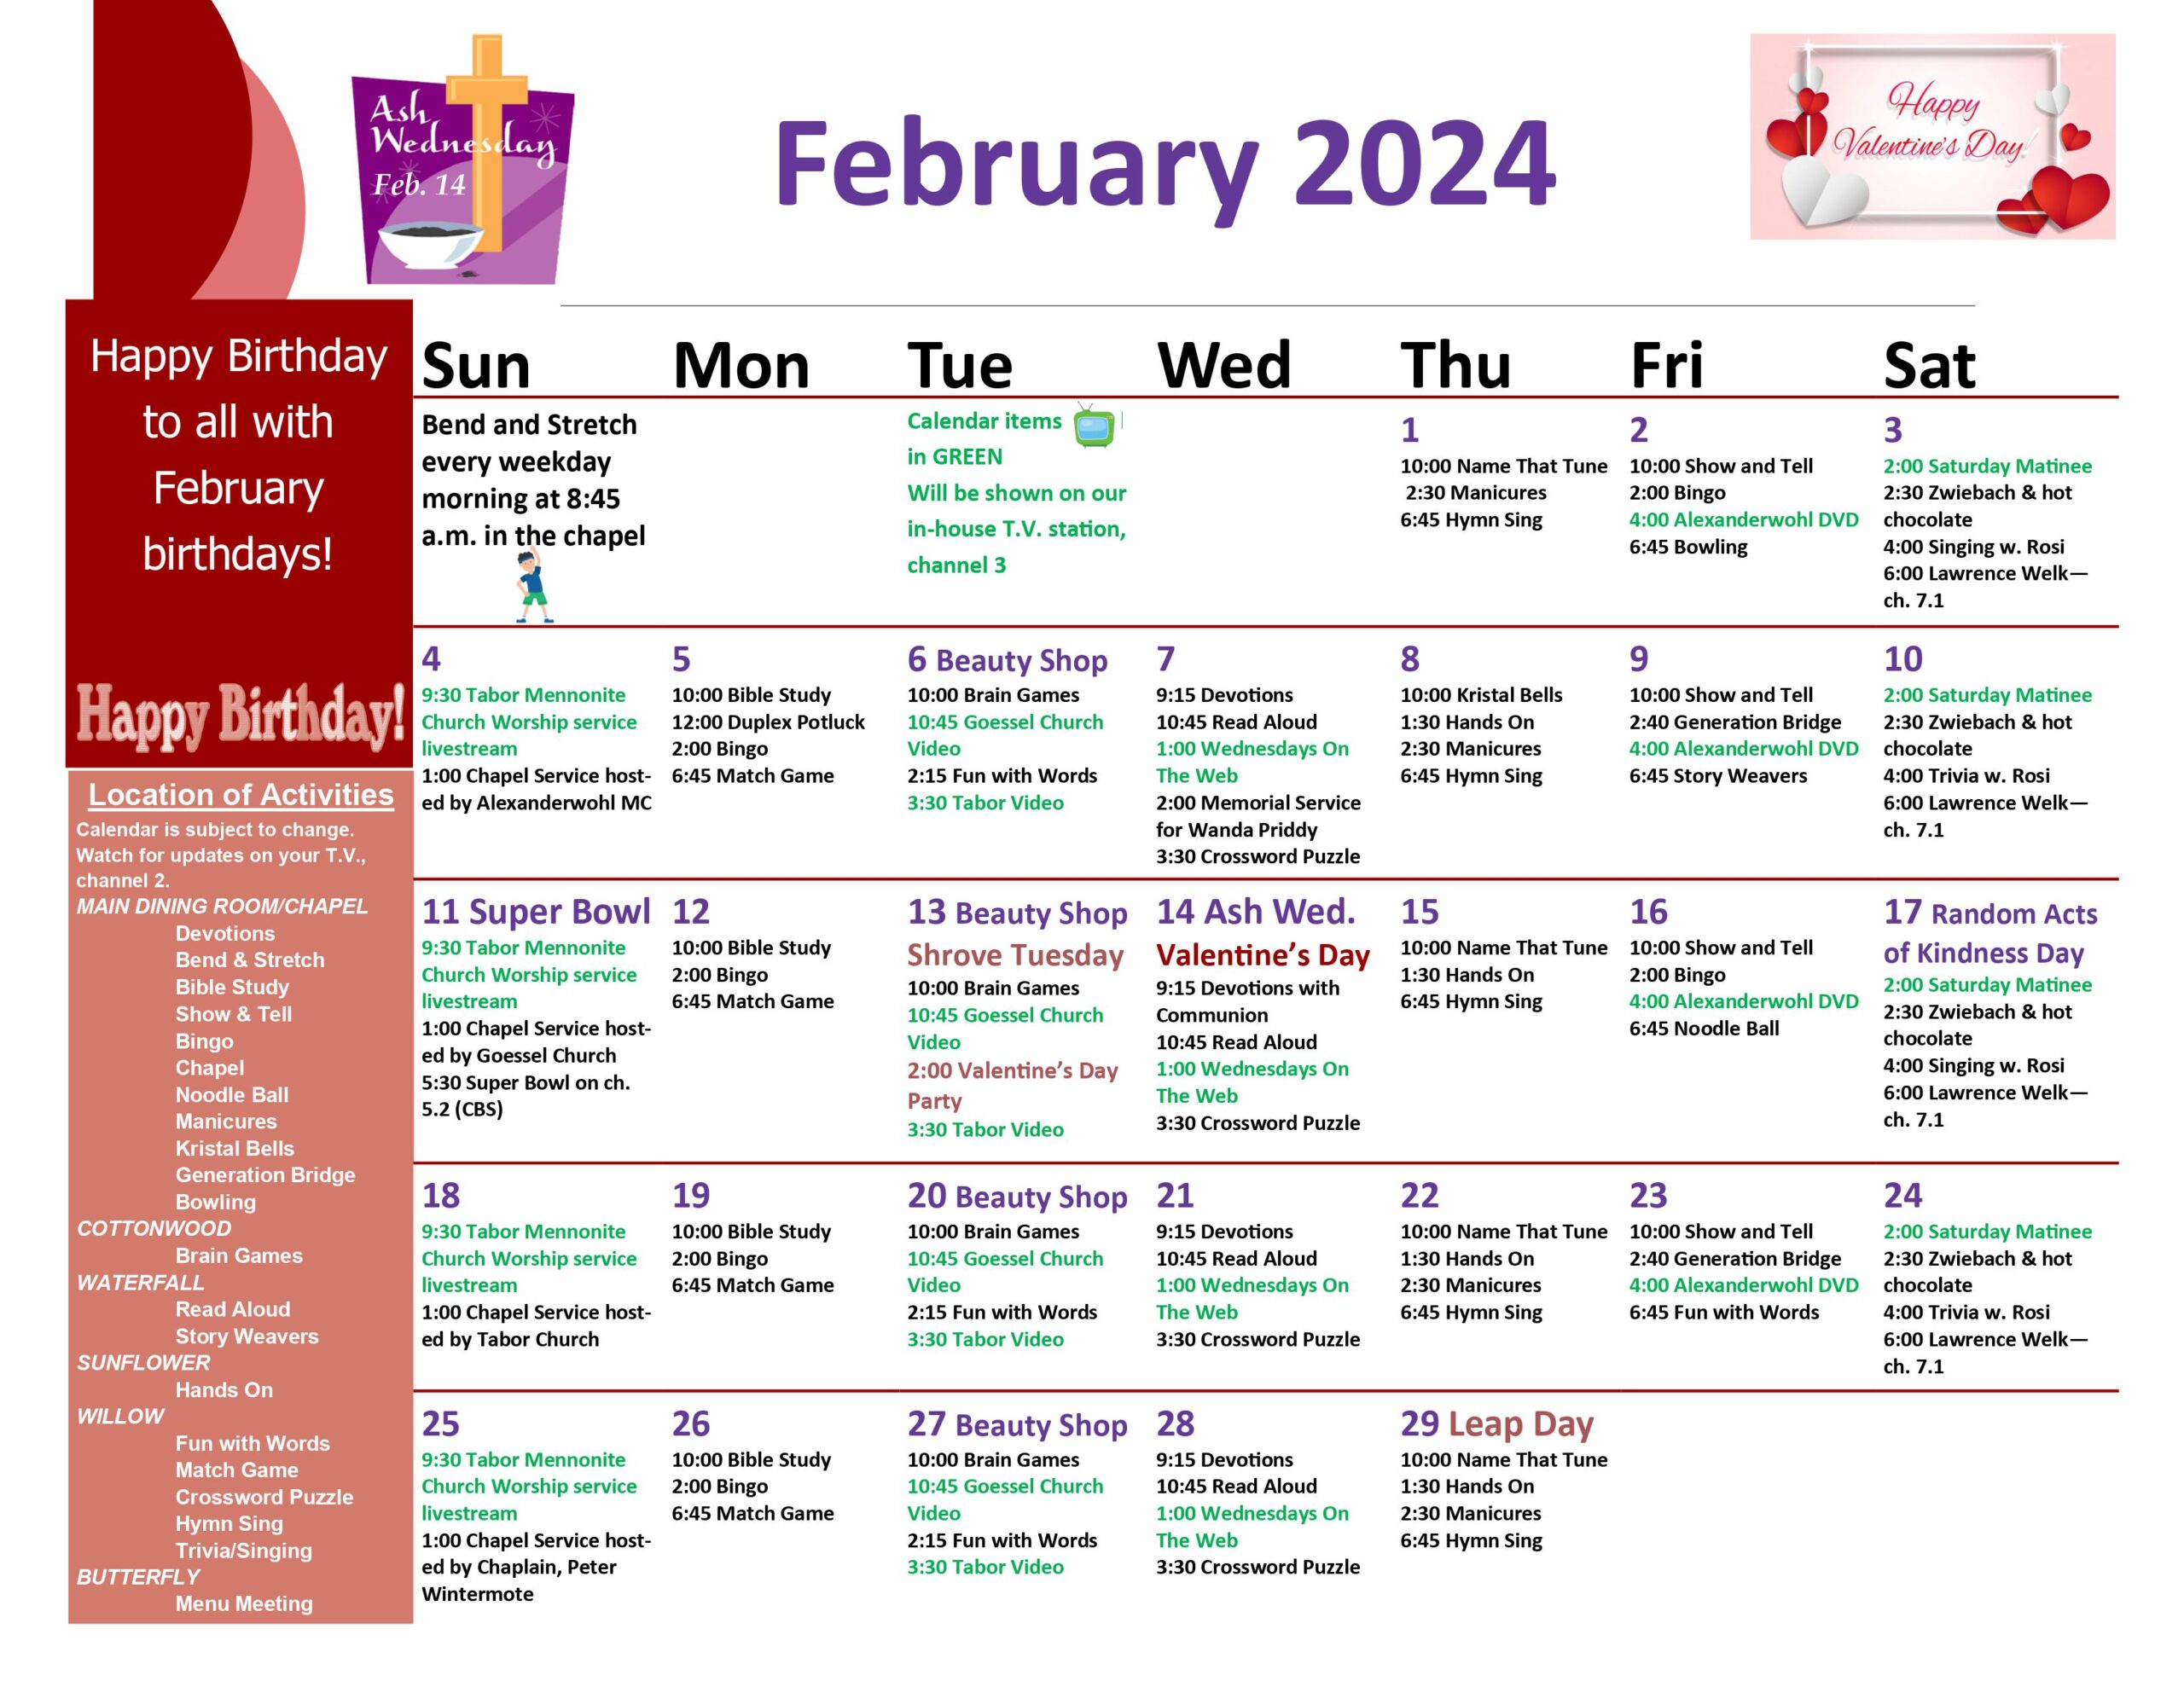 February 2024 activity calendar